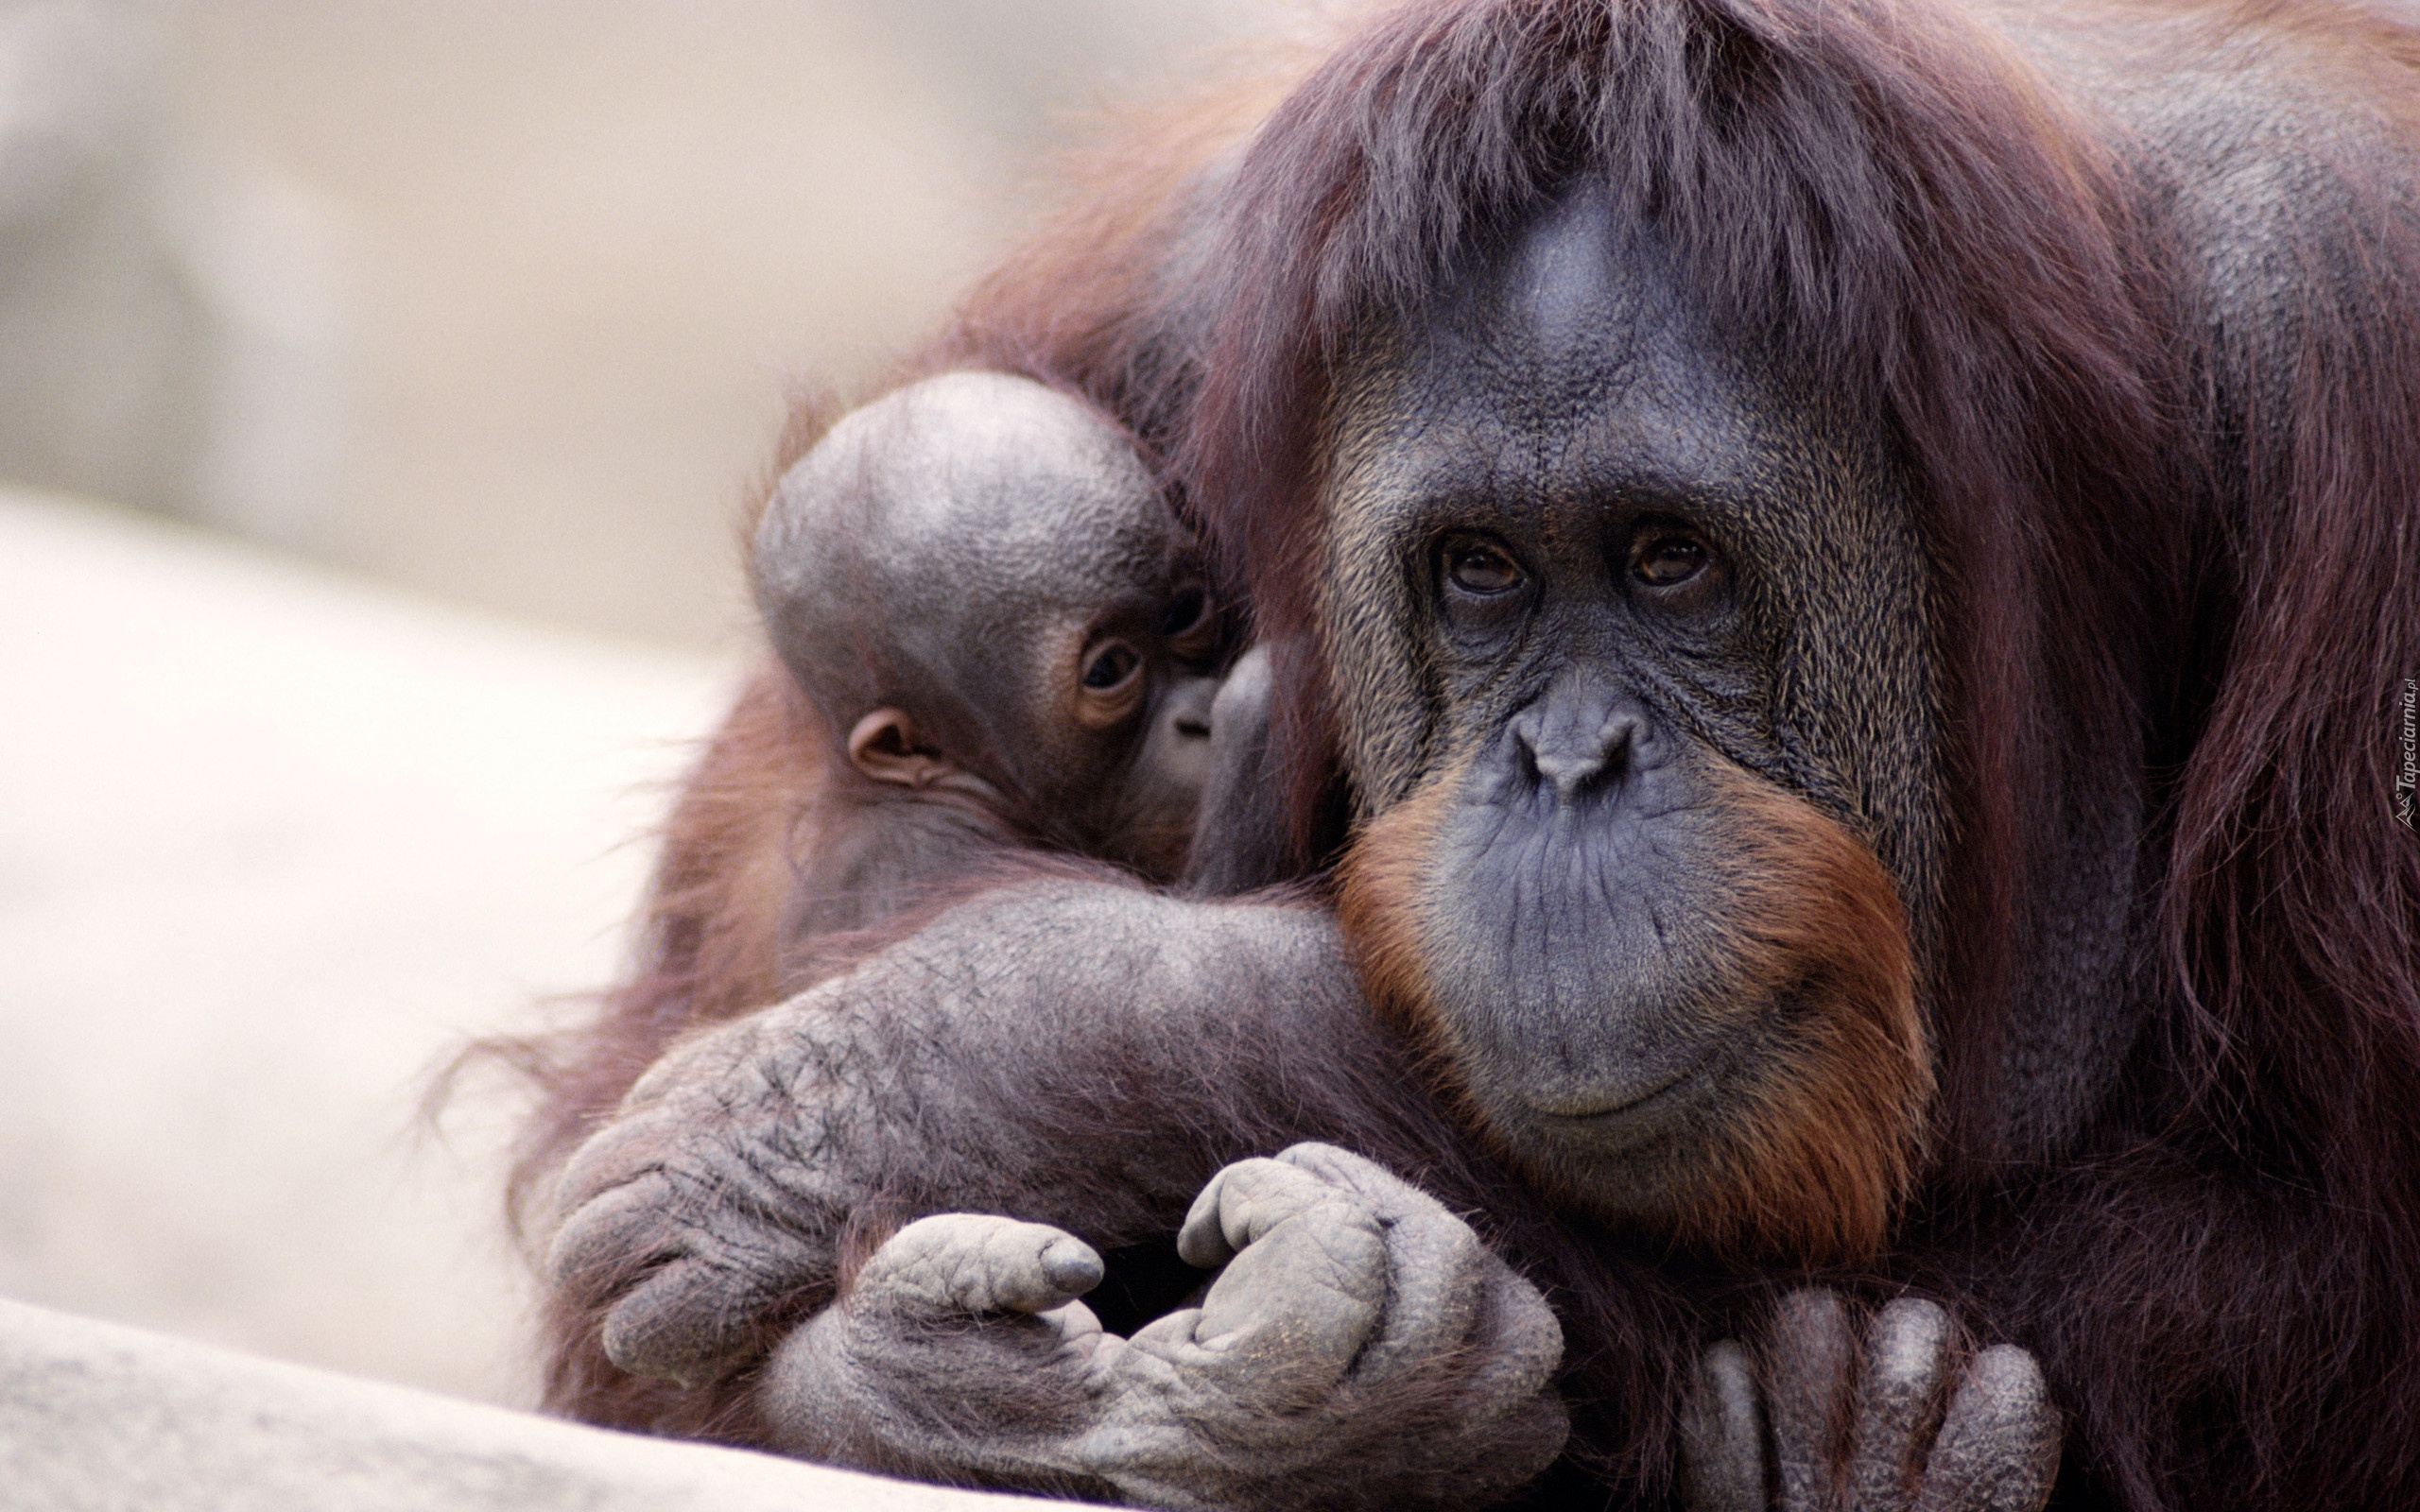 Małpa, Orangutan, Małe